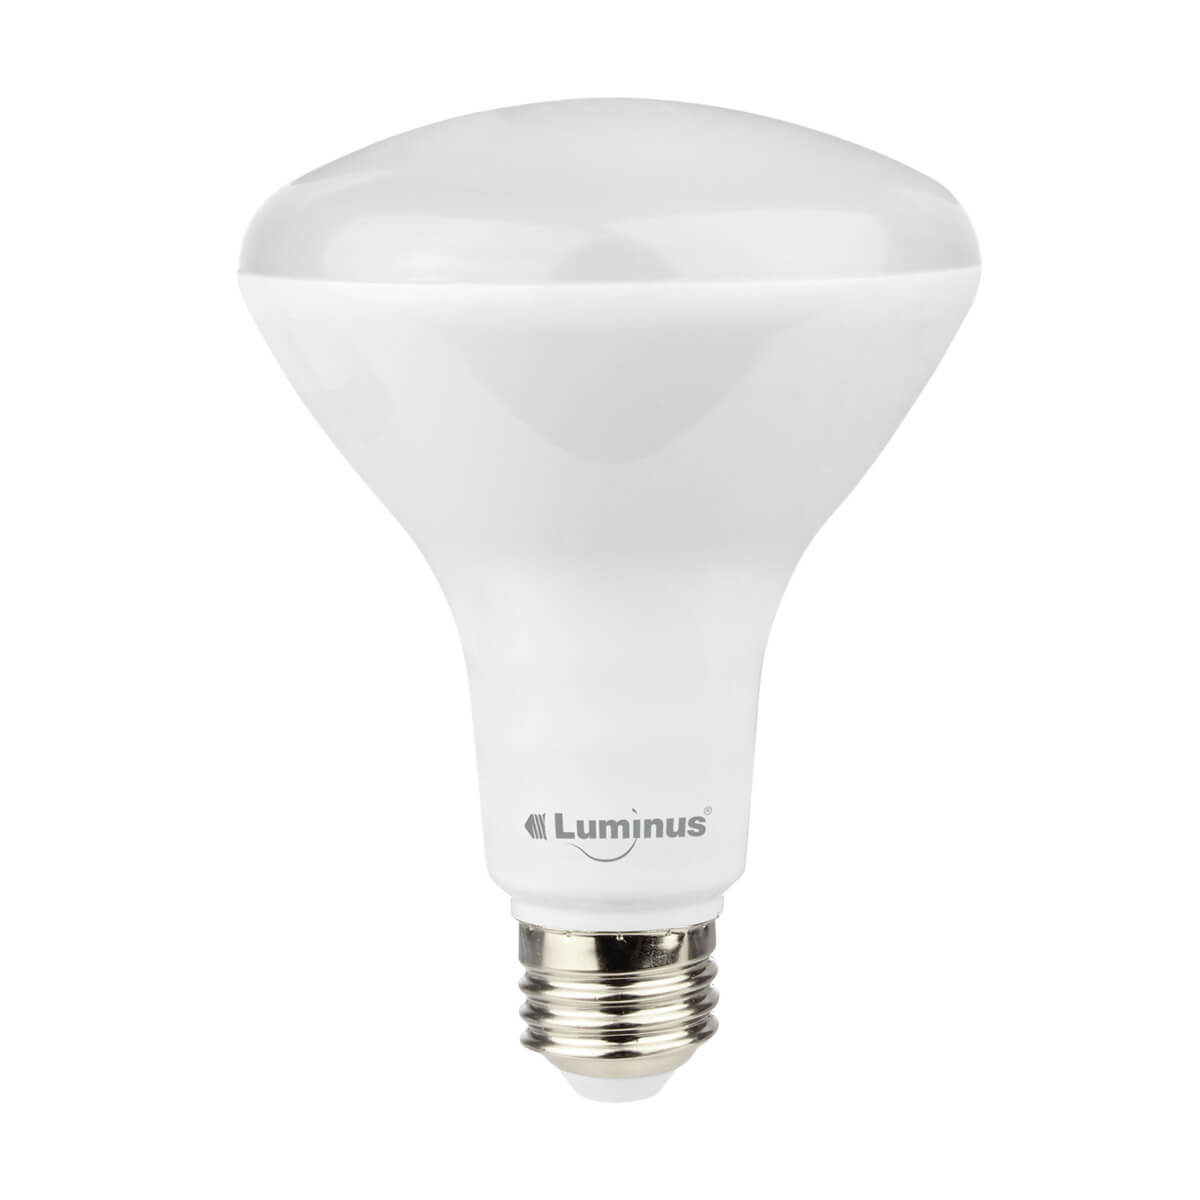 Luminus G5 LED 11W BR30 2700K